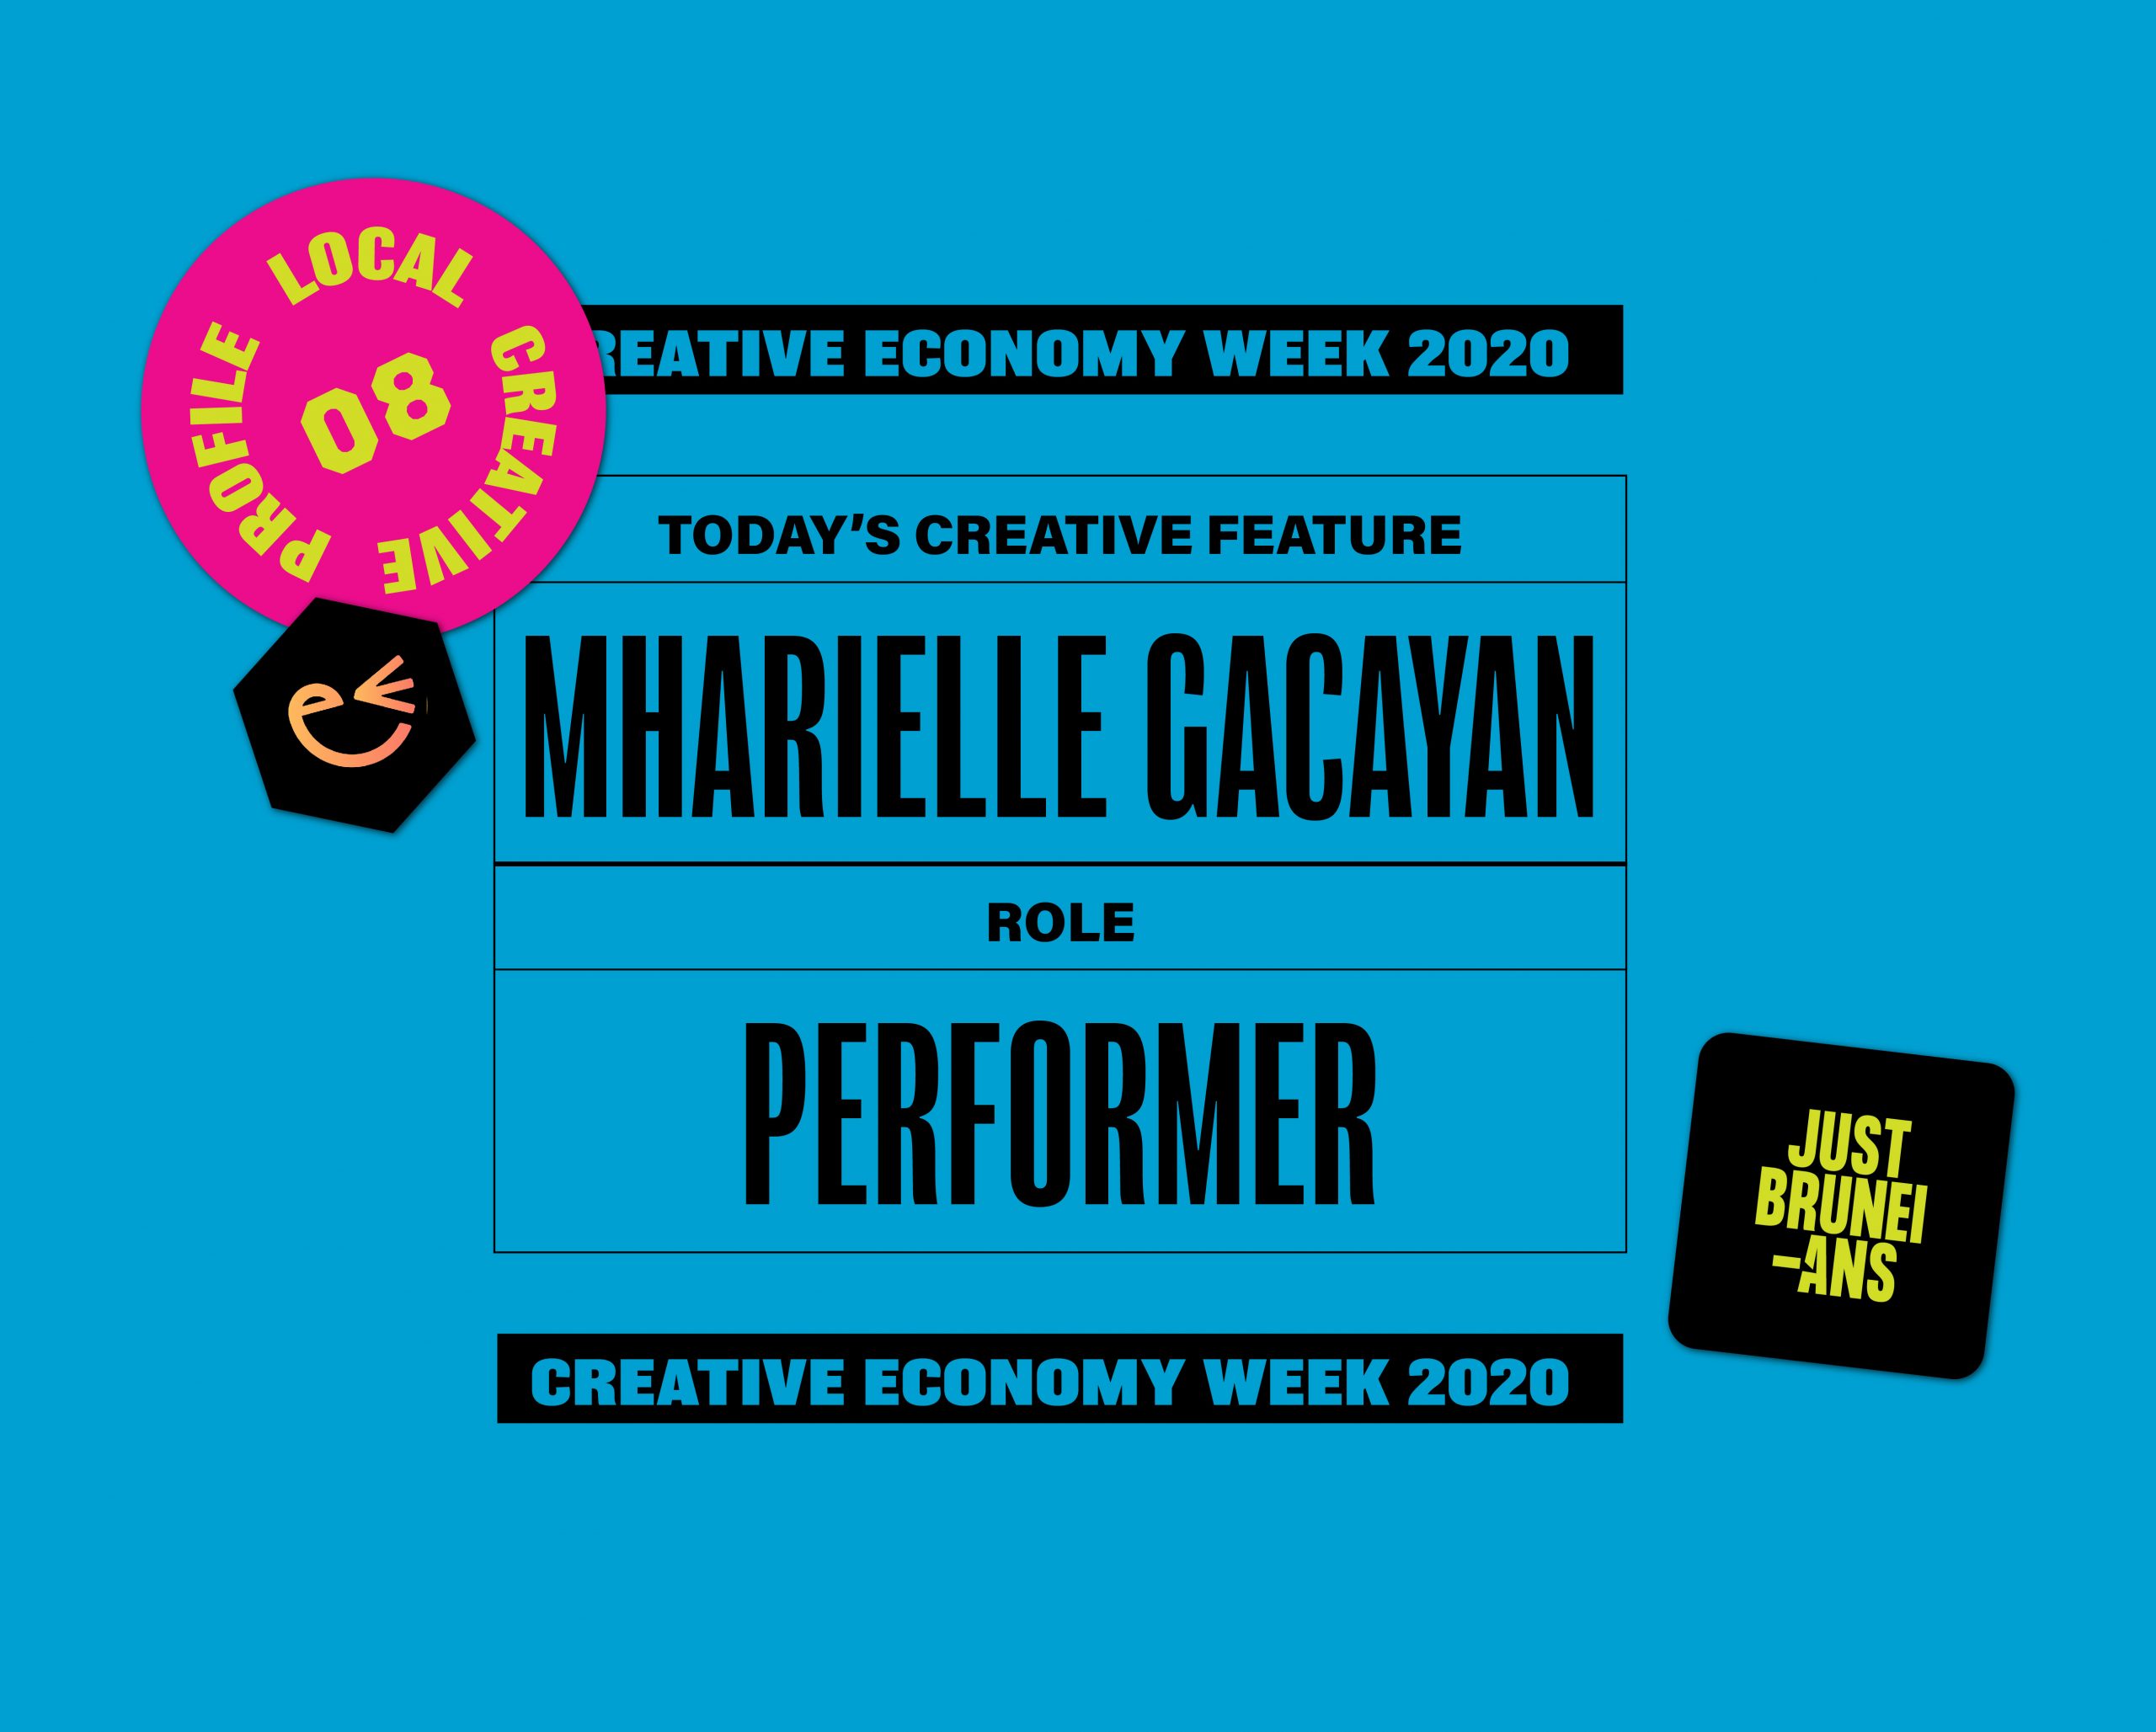 Today's Creative Feature: Mharielle Gacayan | Creative Economy Week 2020